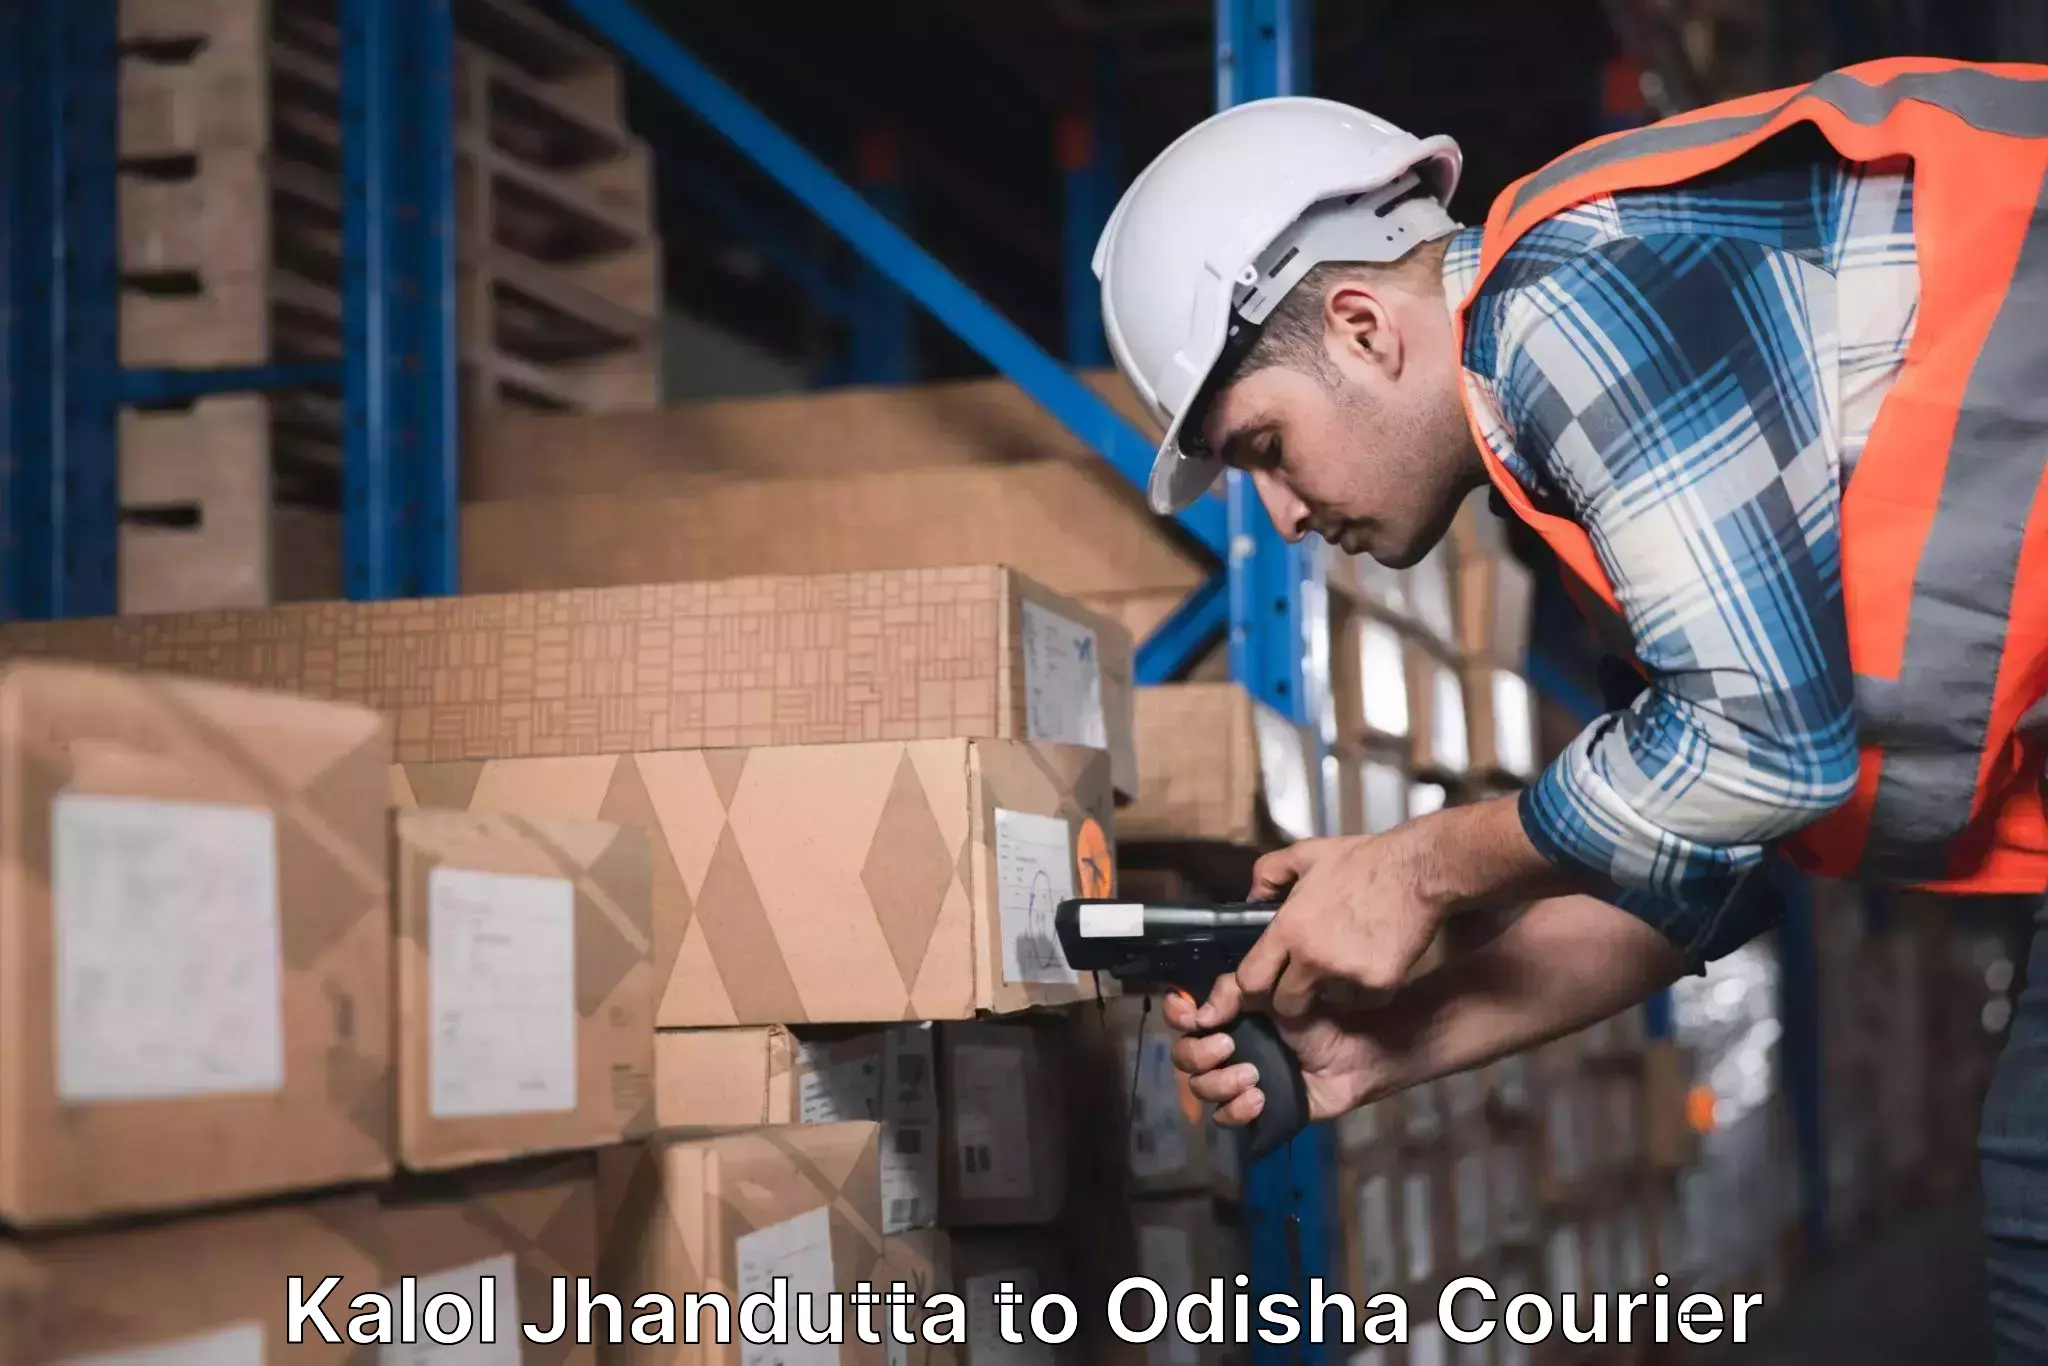 Customizable delivery plans Kalol Jhandutta to Loisingha